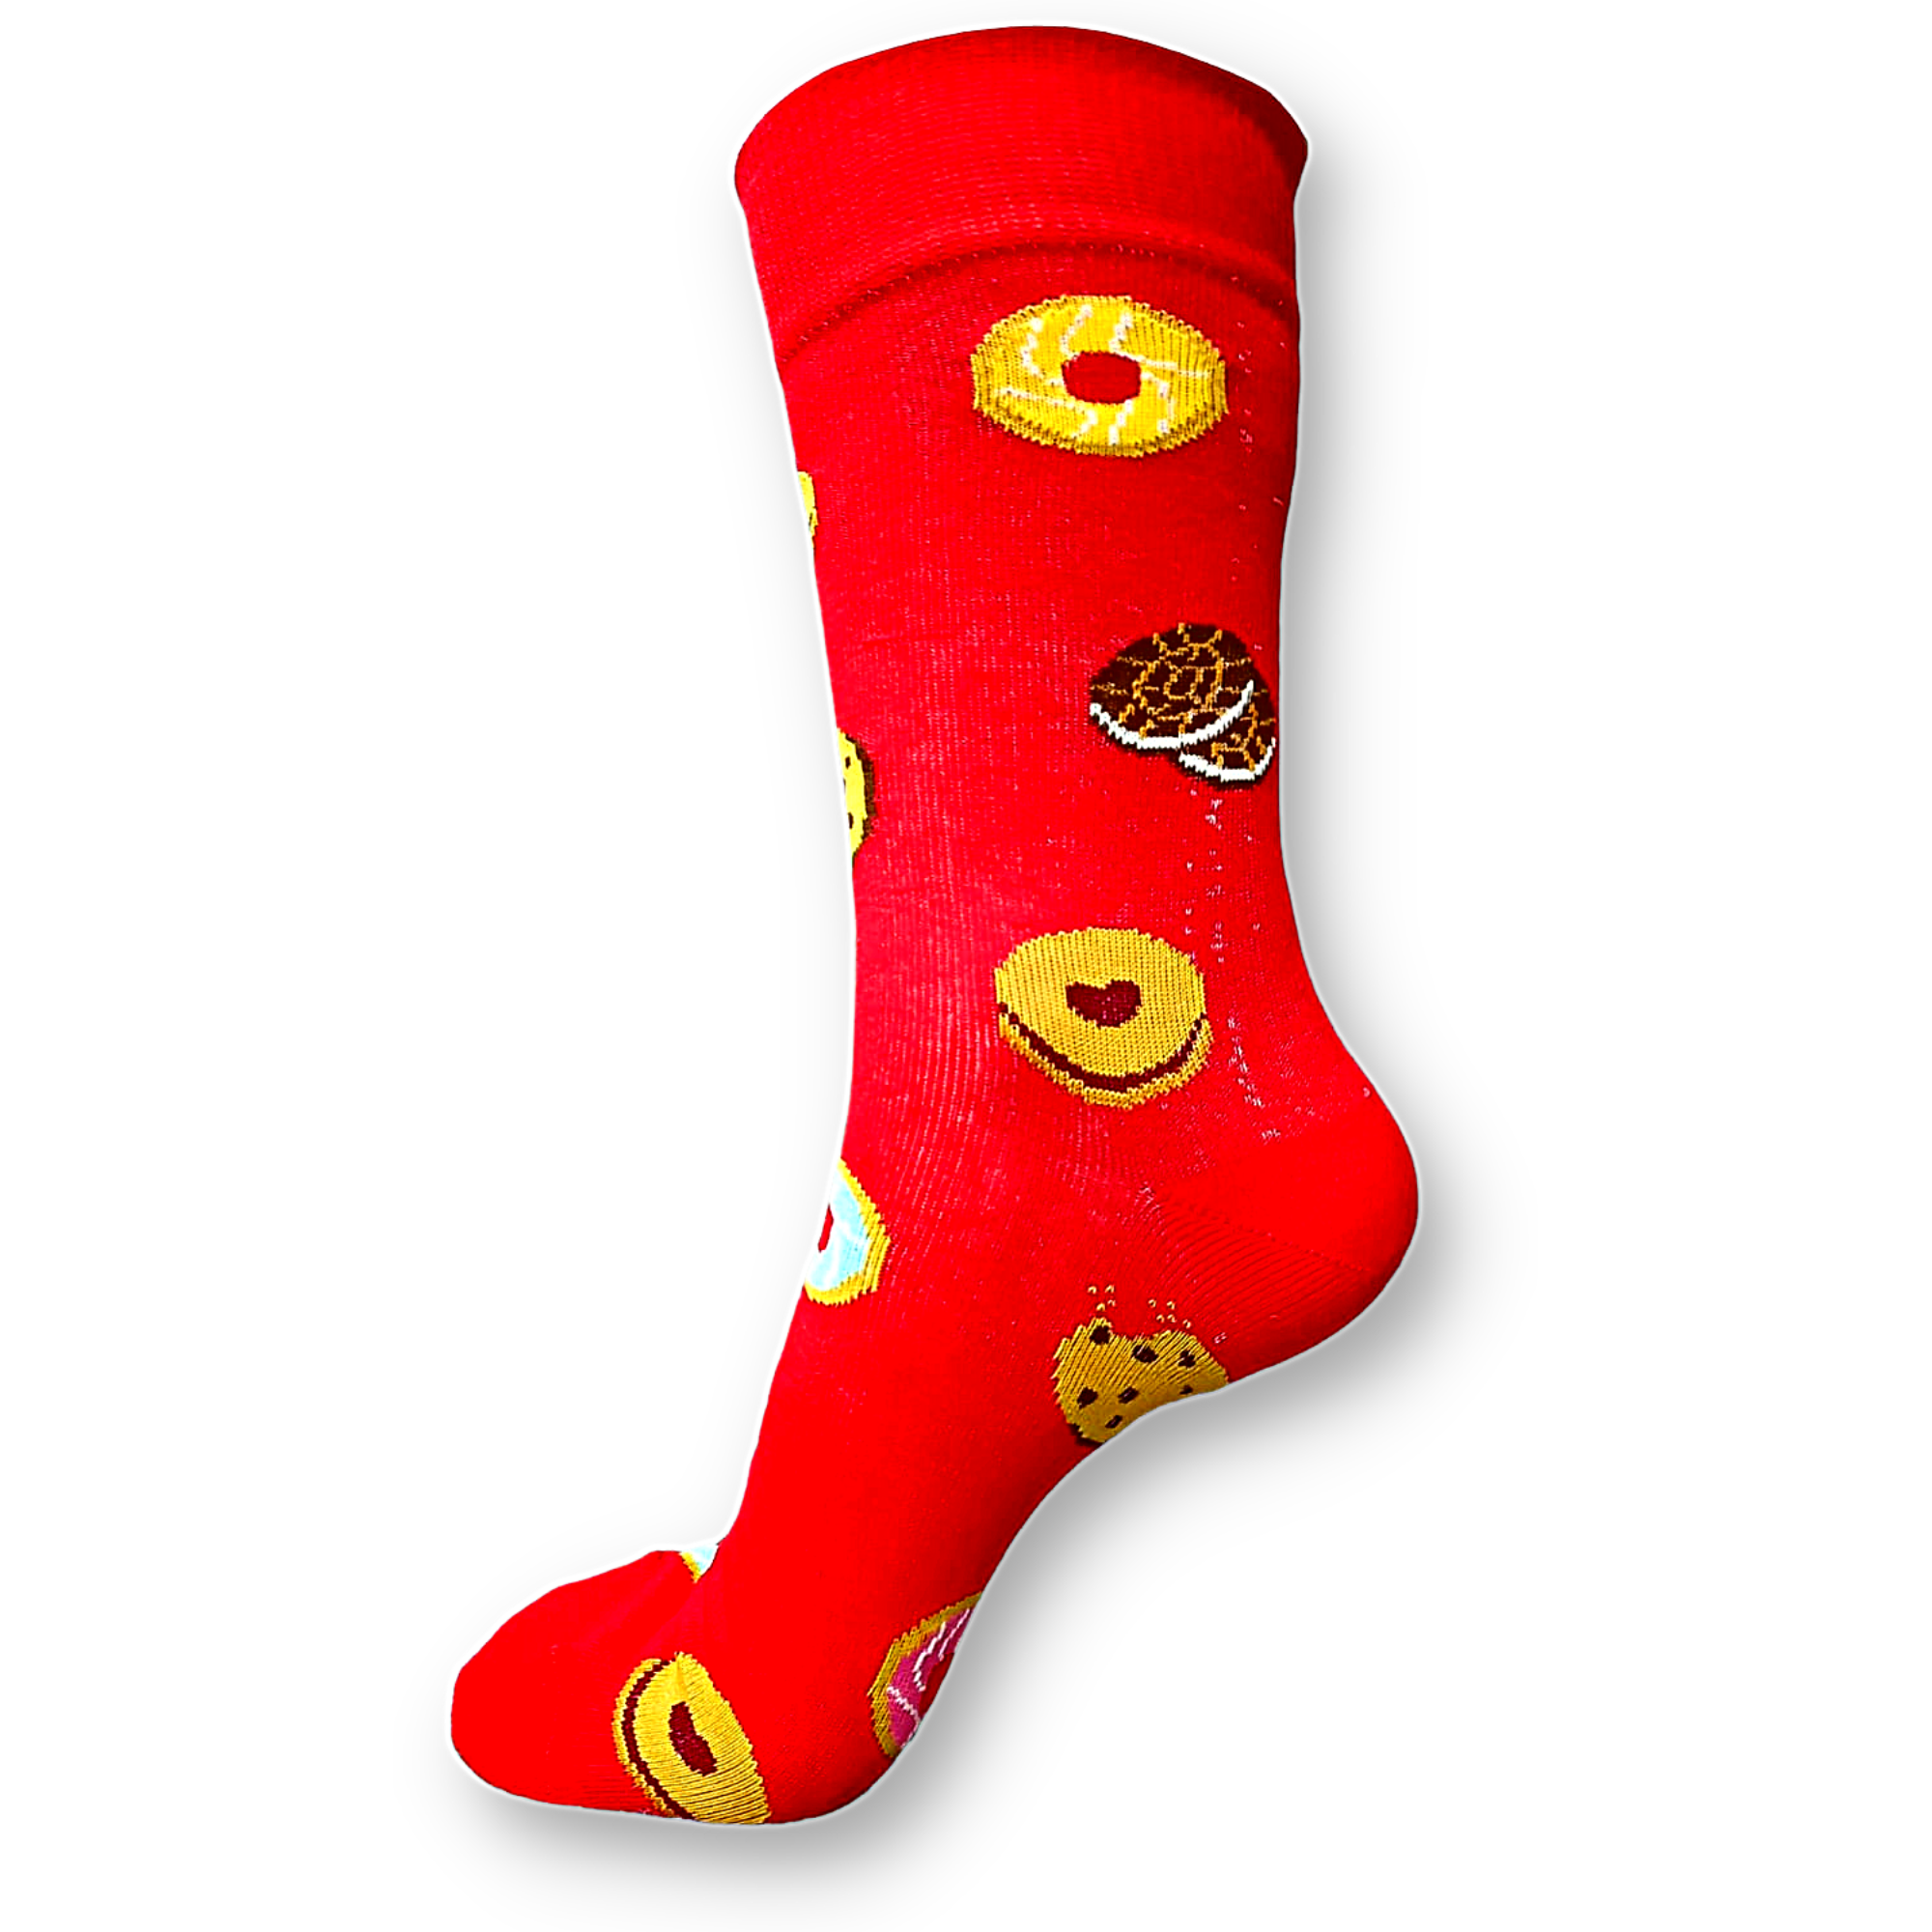 Red Cookies Men's Socks (Size 9-12)